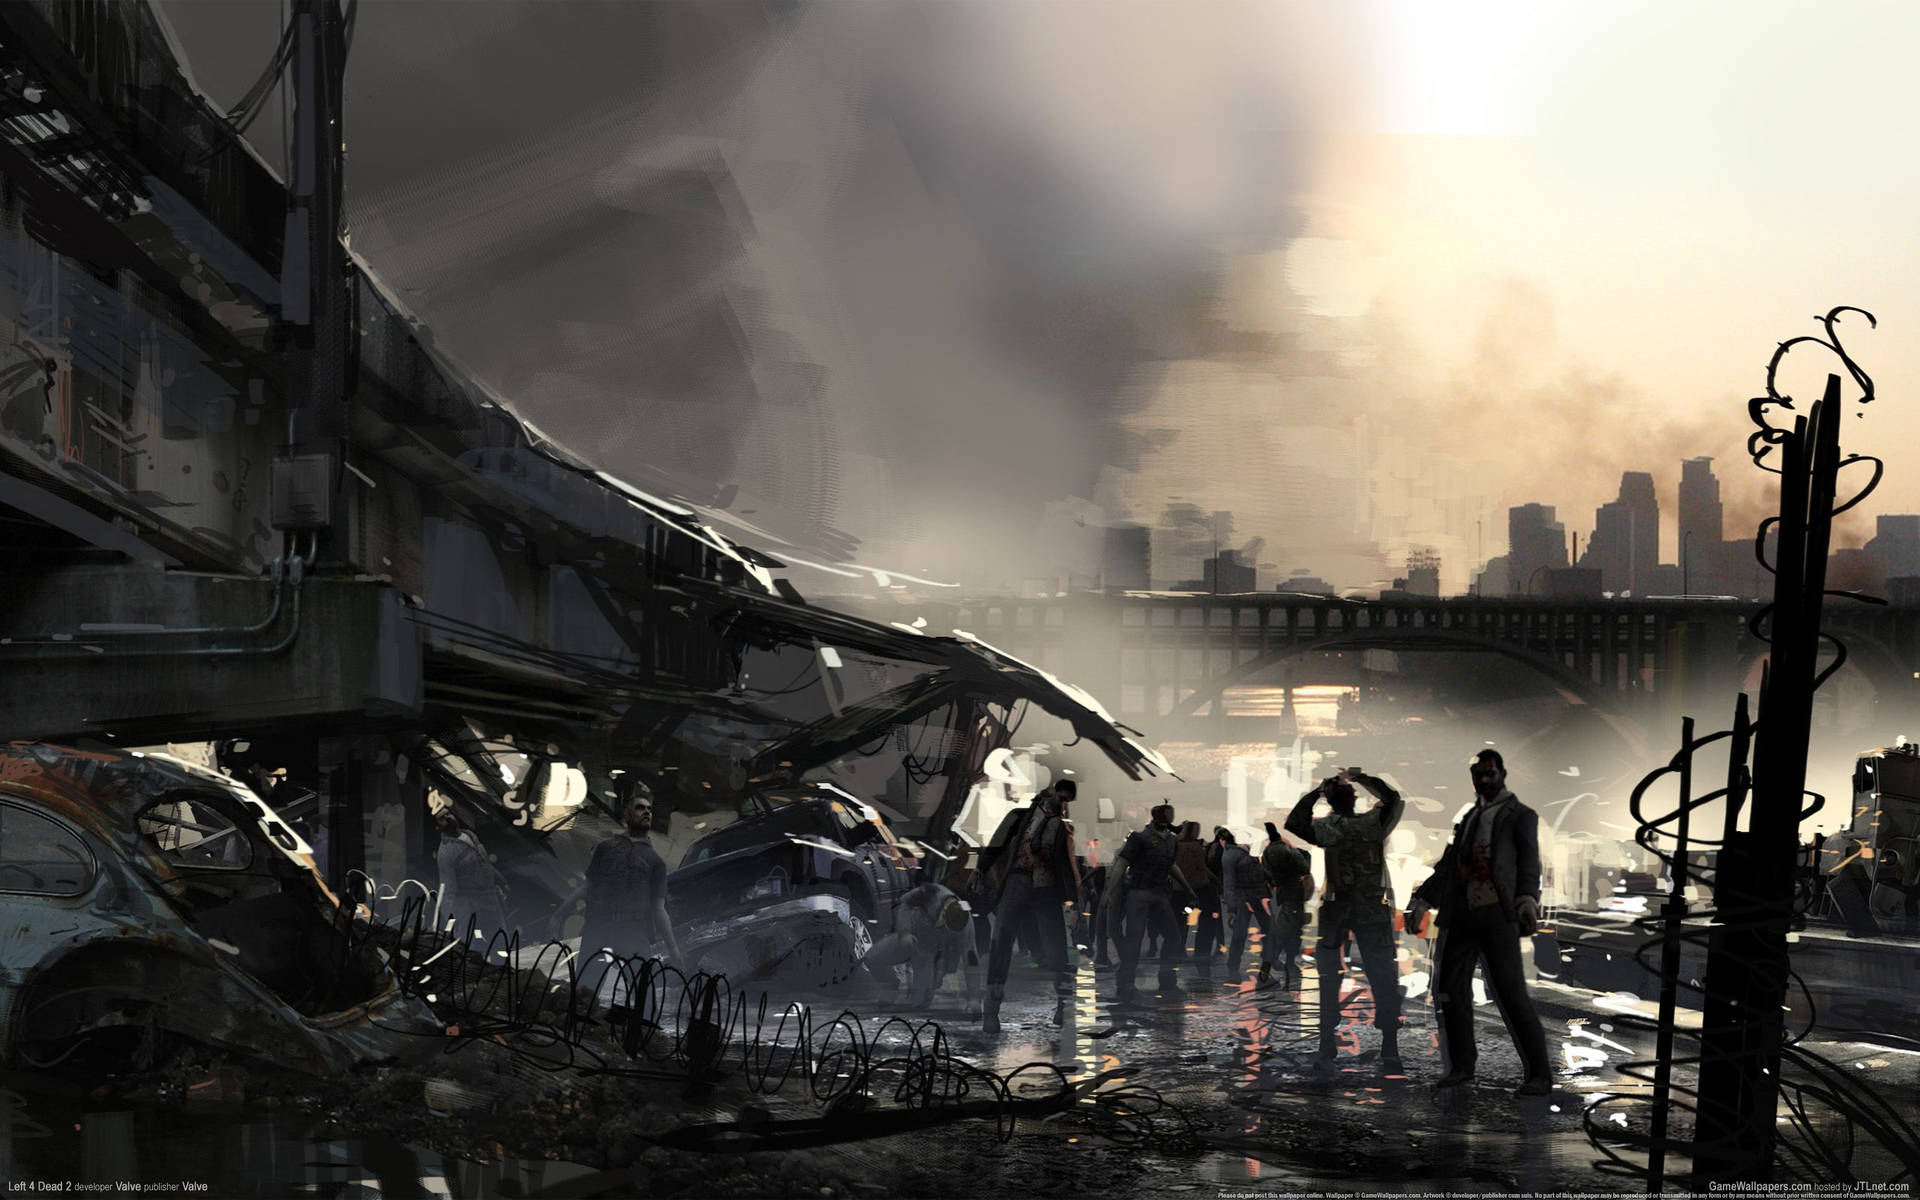 Zombies in City: Apocalypse Survival